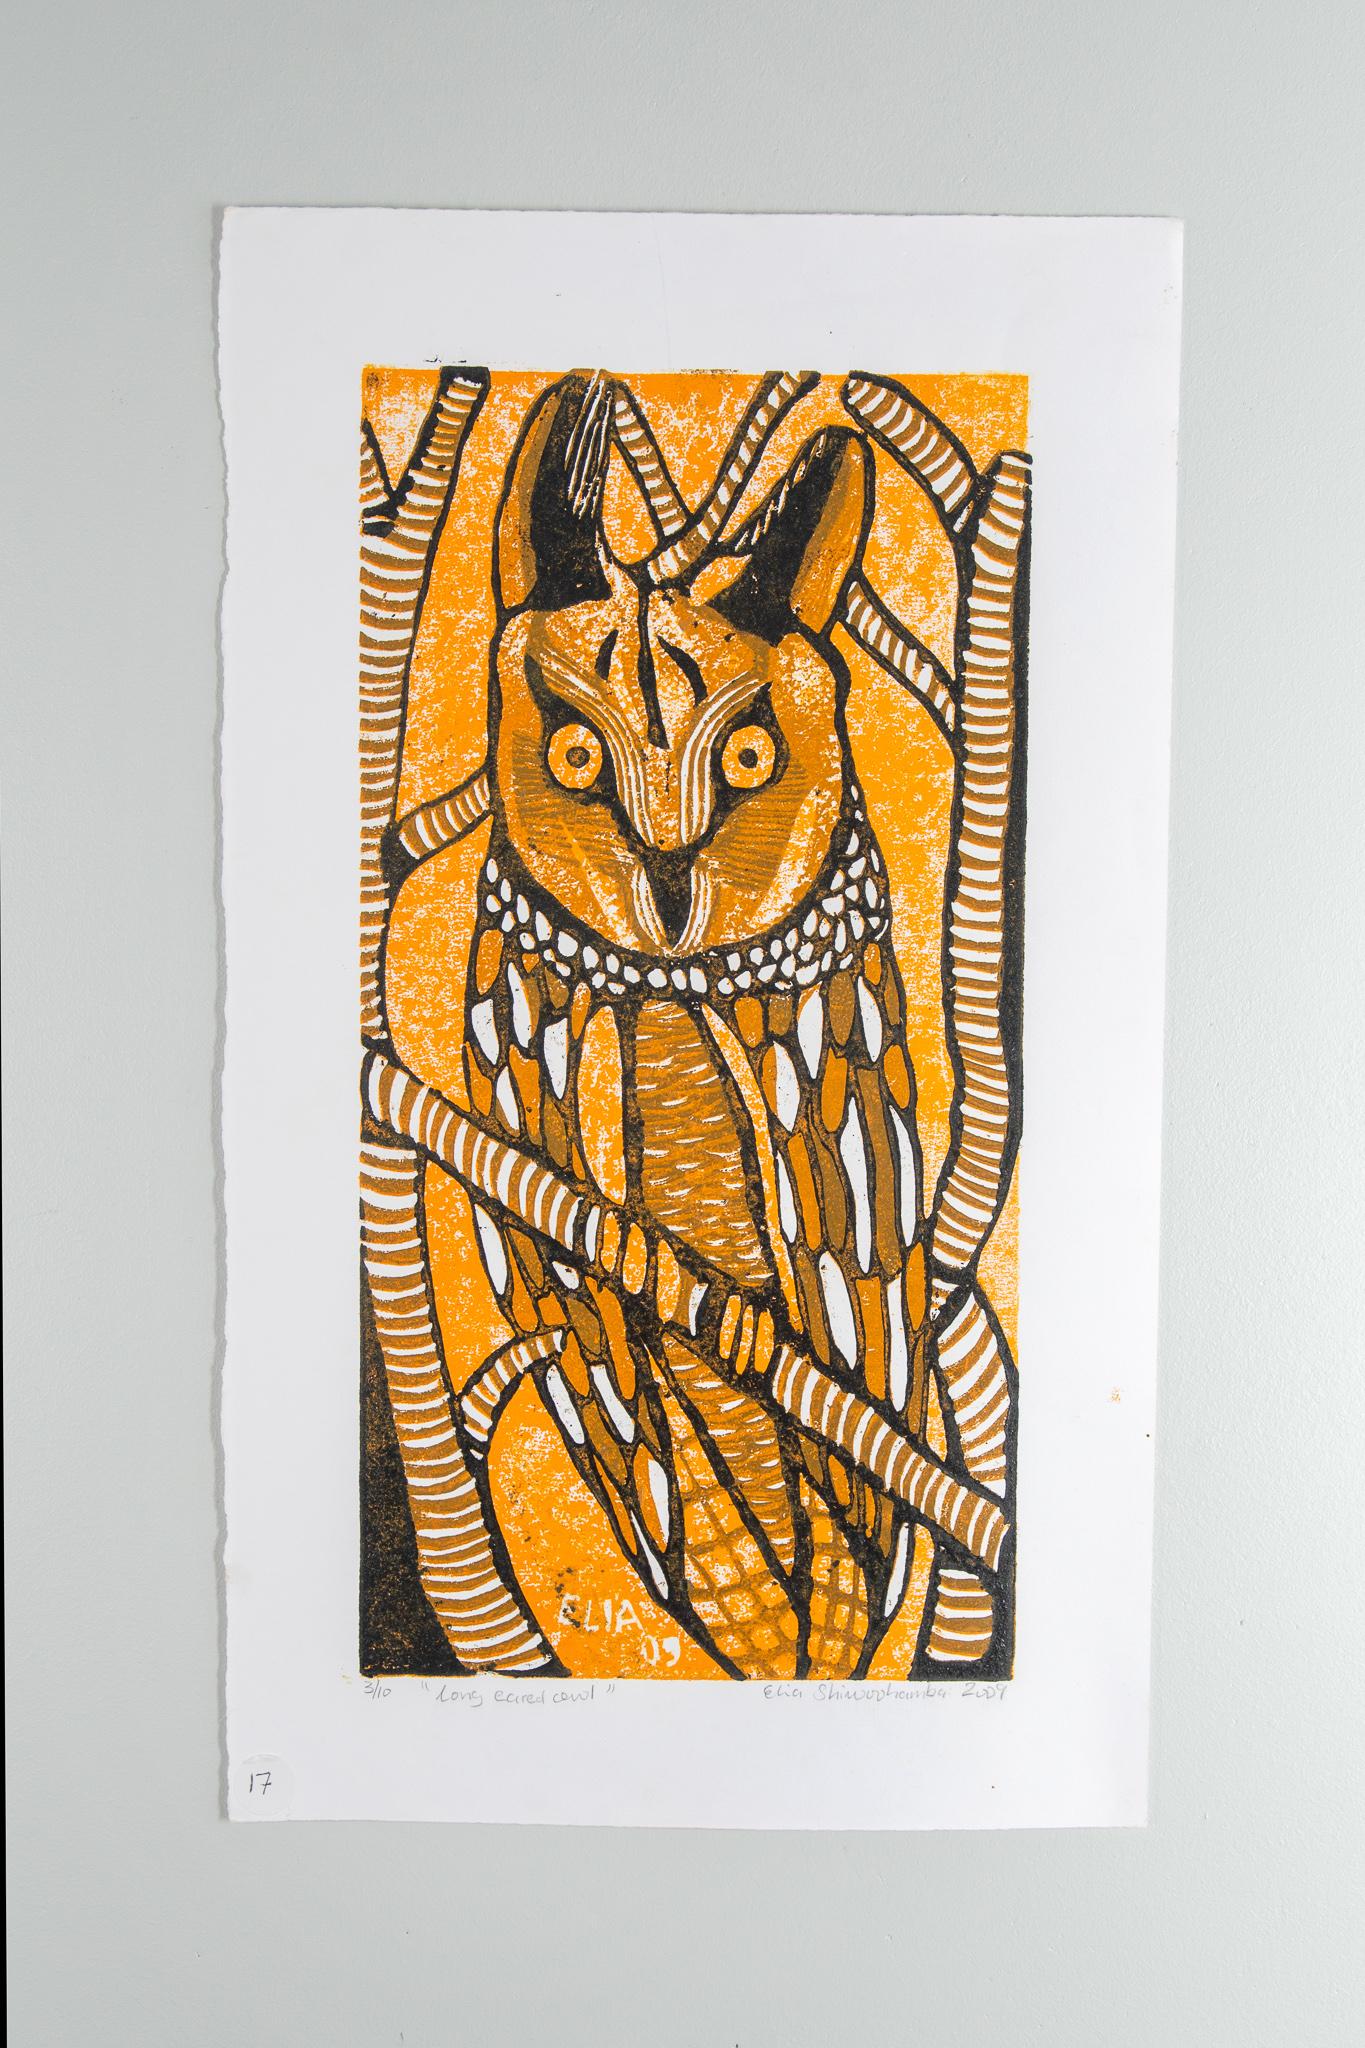 Long Eared Owl, Elia Shiwoohamba, Kartondruck auf Papier